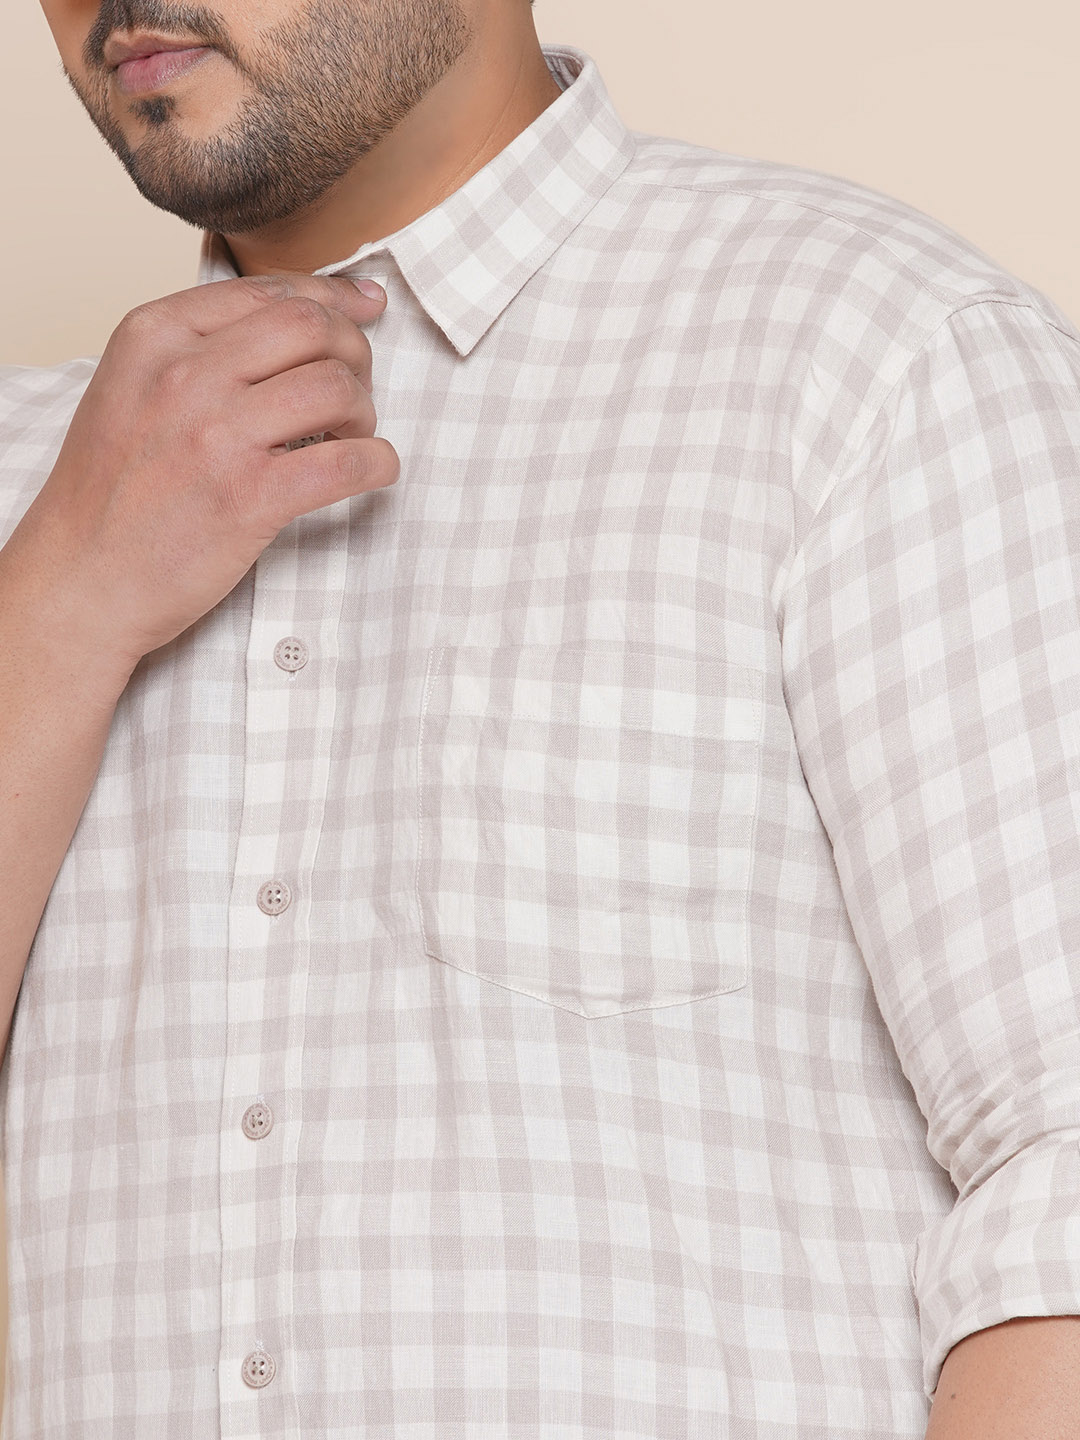 Monochrome Linen Grid Shirt